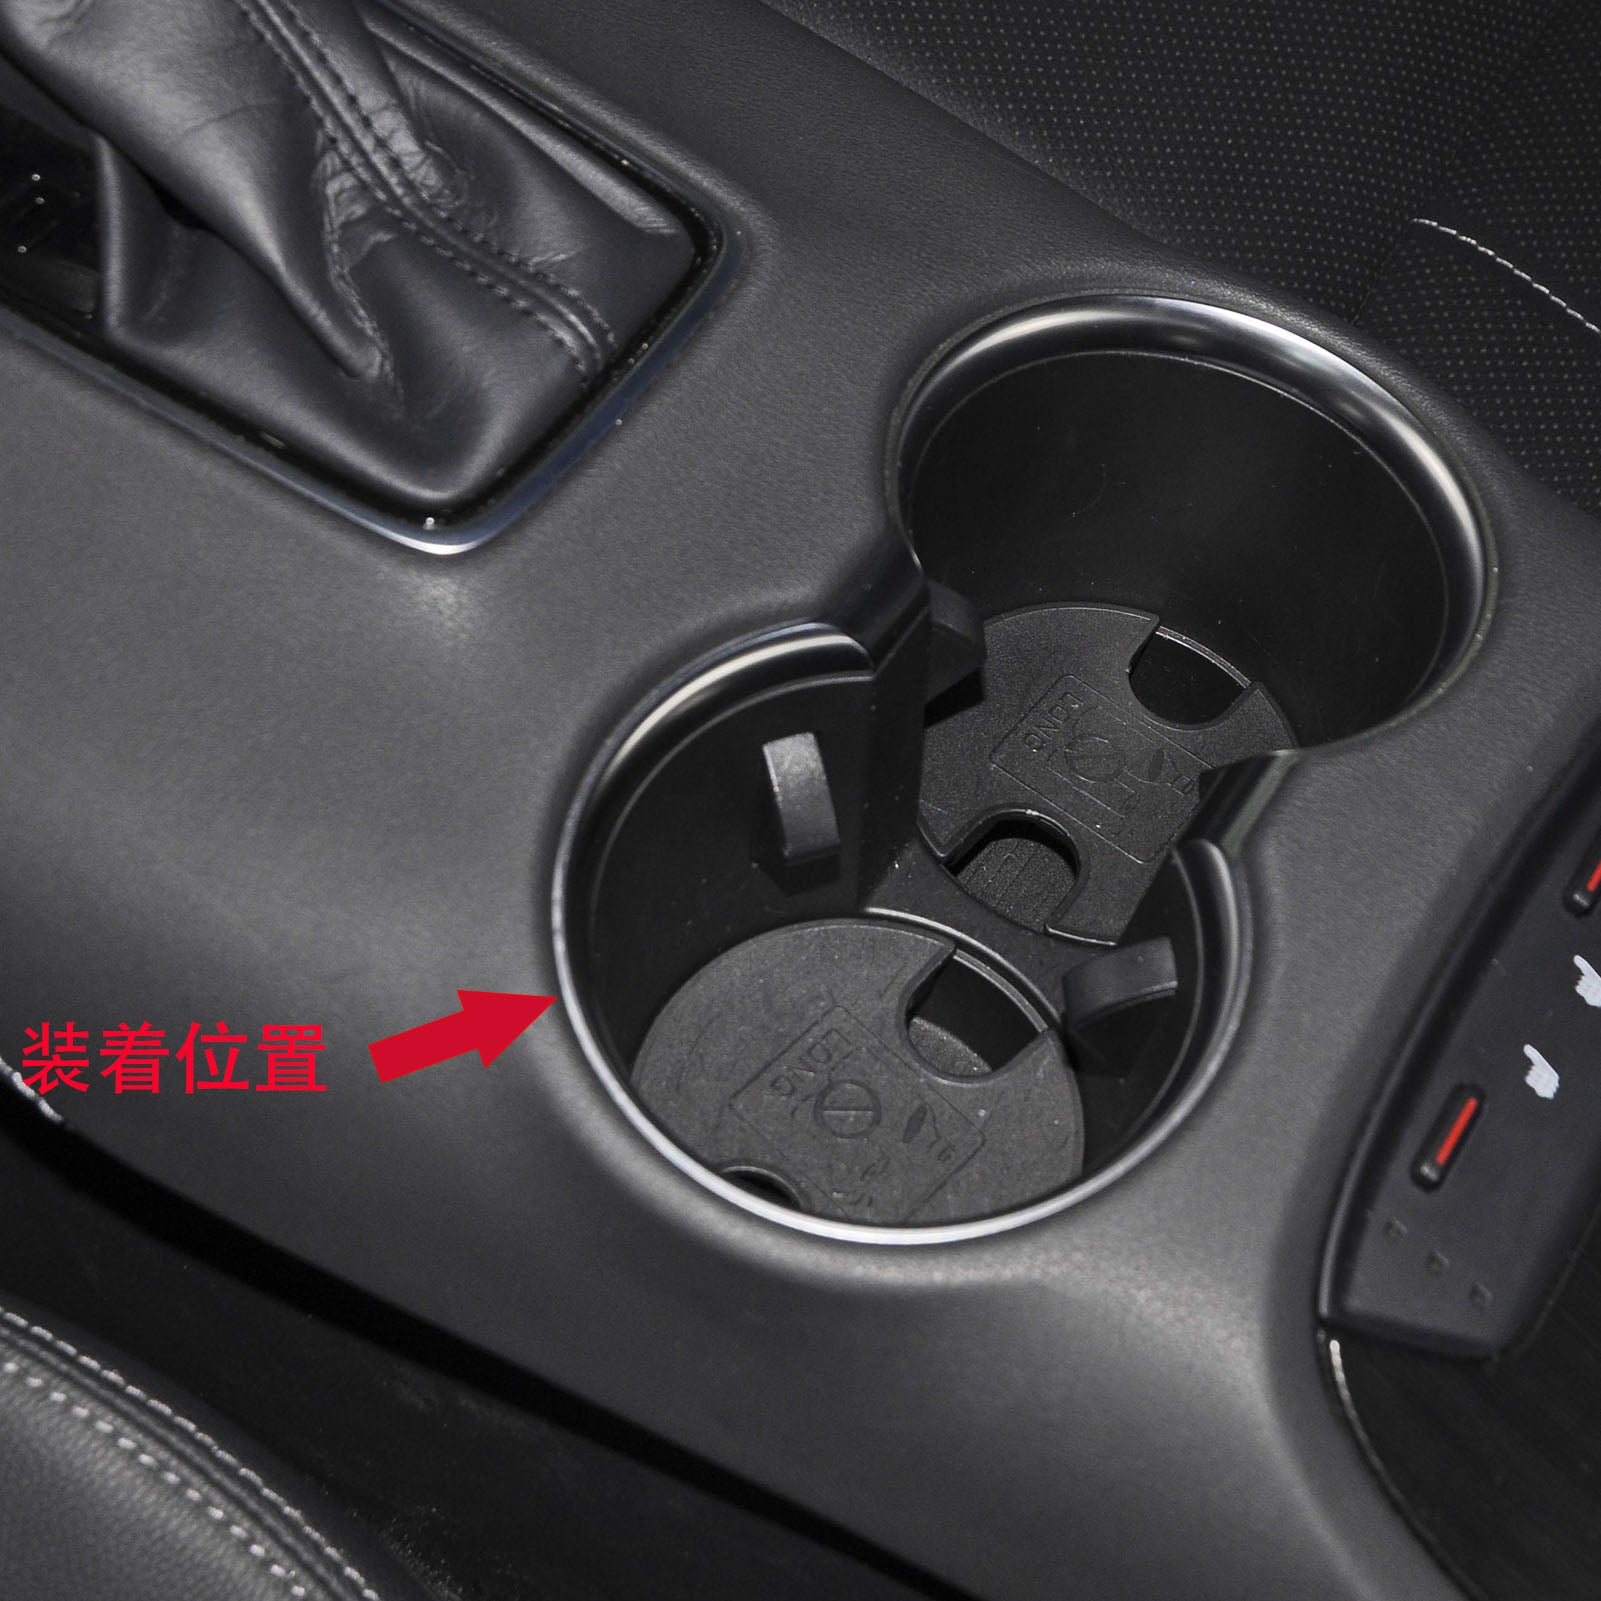 Ruiq トヨタ 新型 ハリアー 80系 専用 内装 変速レバー カバー